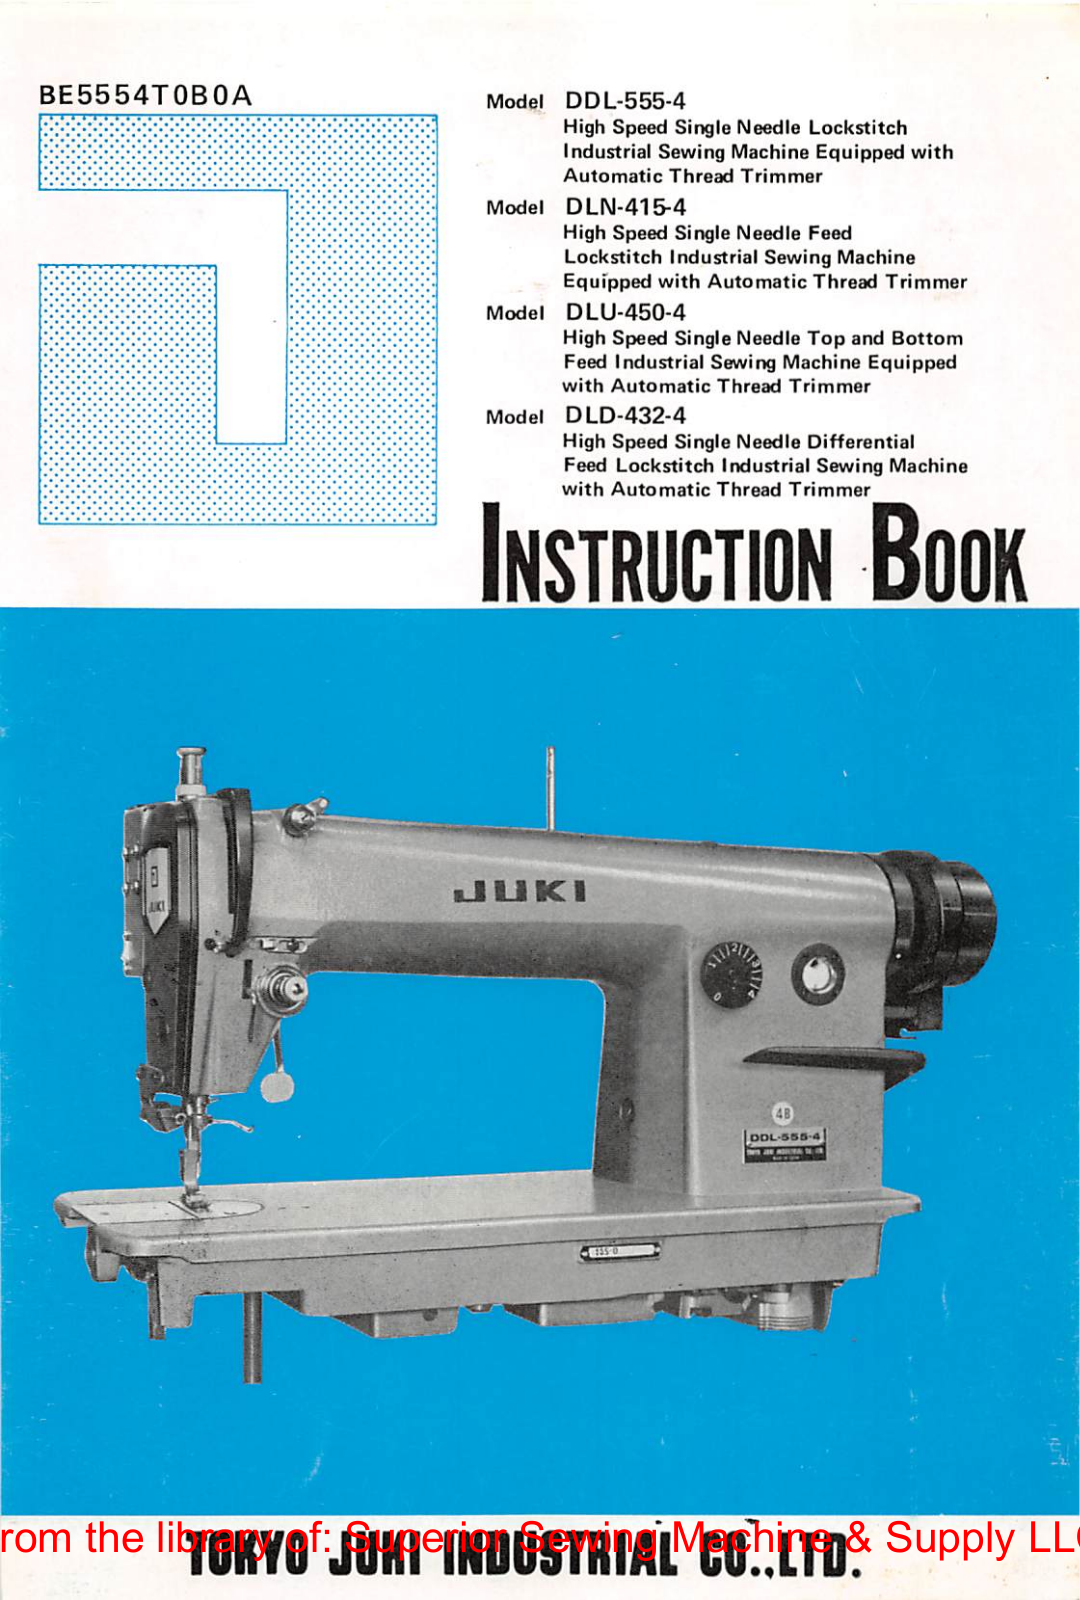 Juki DDL-555-4, DLN-415-4, DLU-450-4, DLD-432-4 Instruction Manual